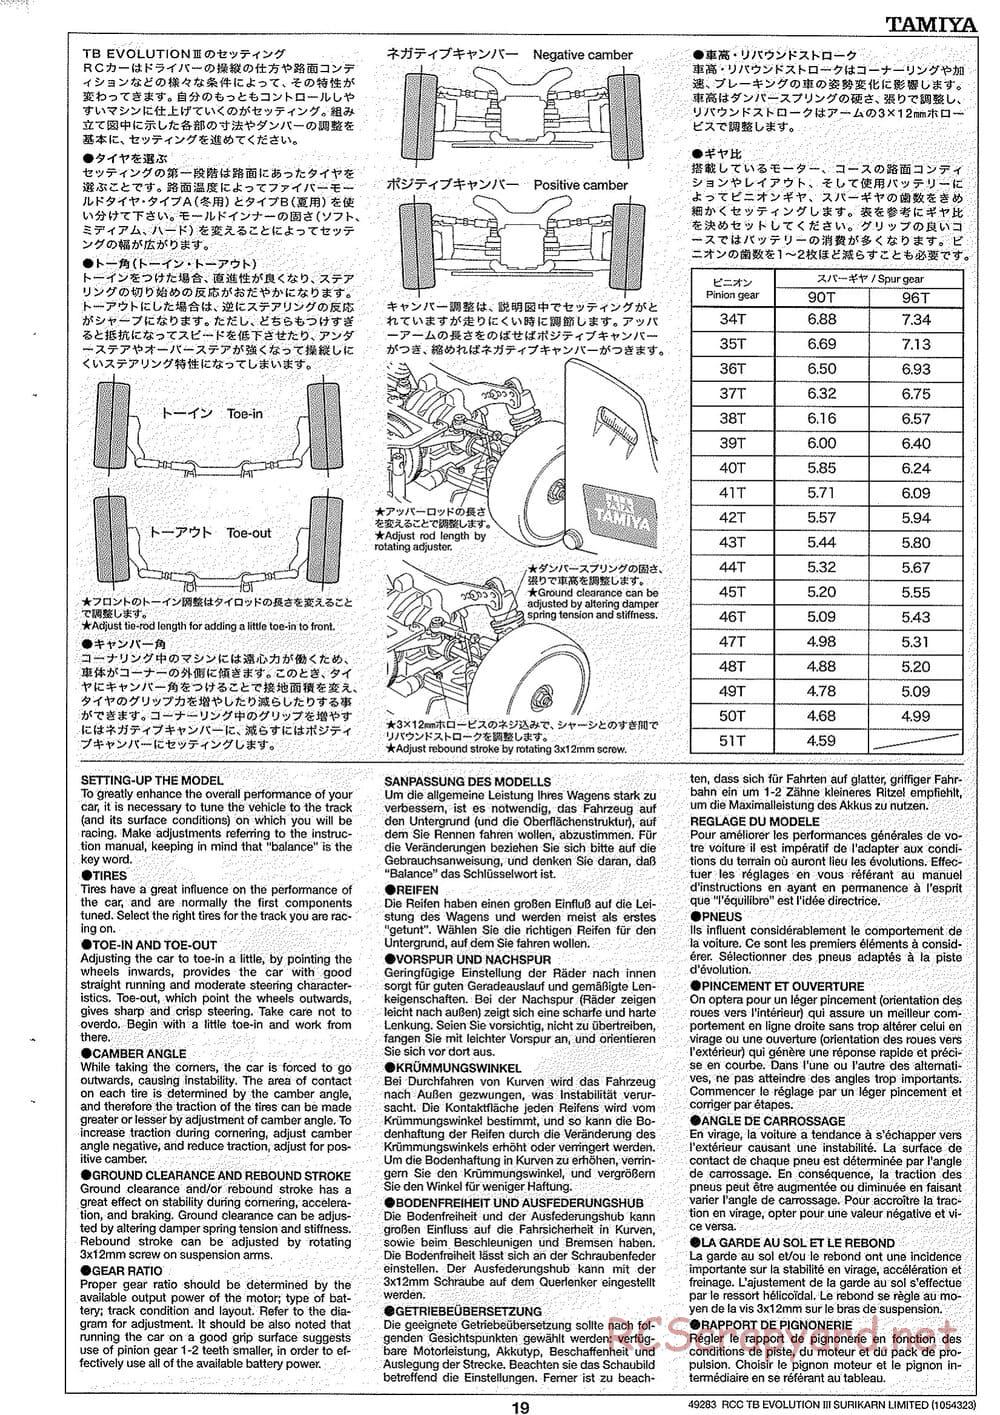 Tamiya - TB Evolution III Surikarn Limited Chassis - Manual - Page 19